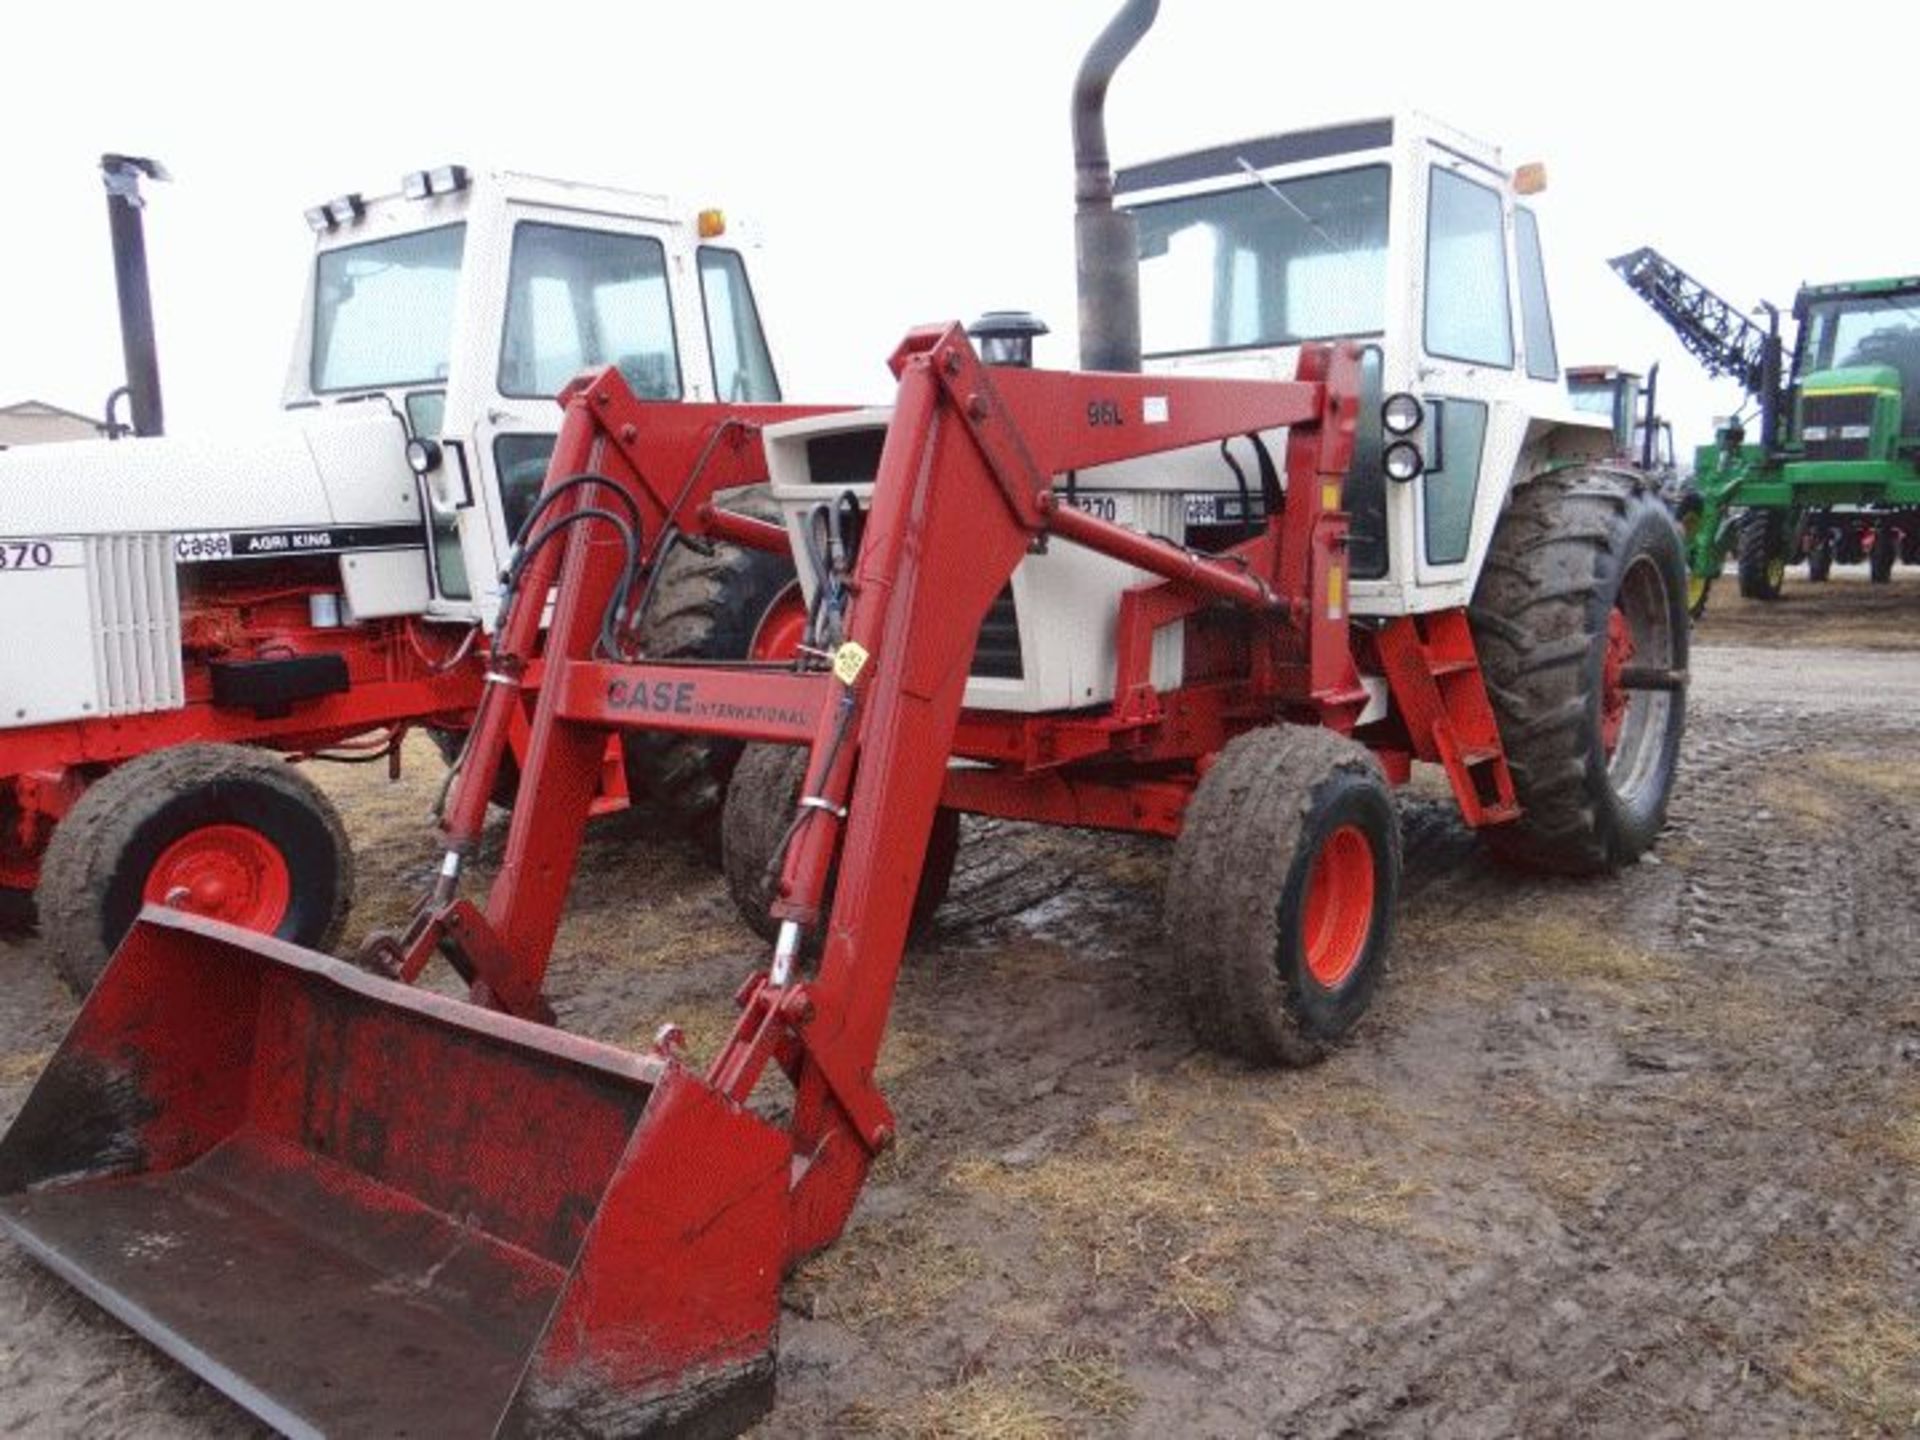 Lot # 1825 Case 1370 Tractor App 4500 hrs, w/Loader